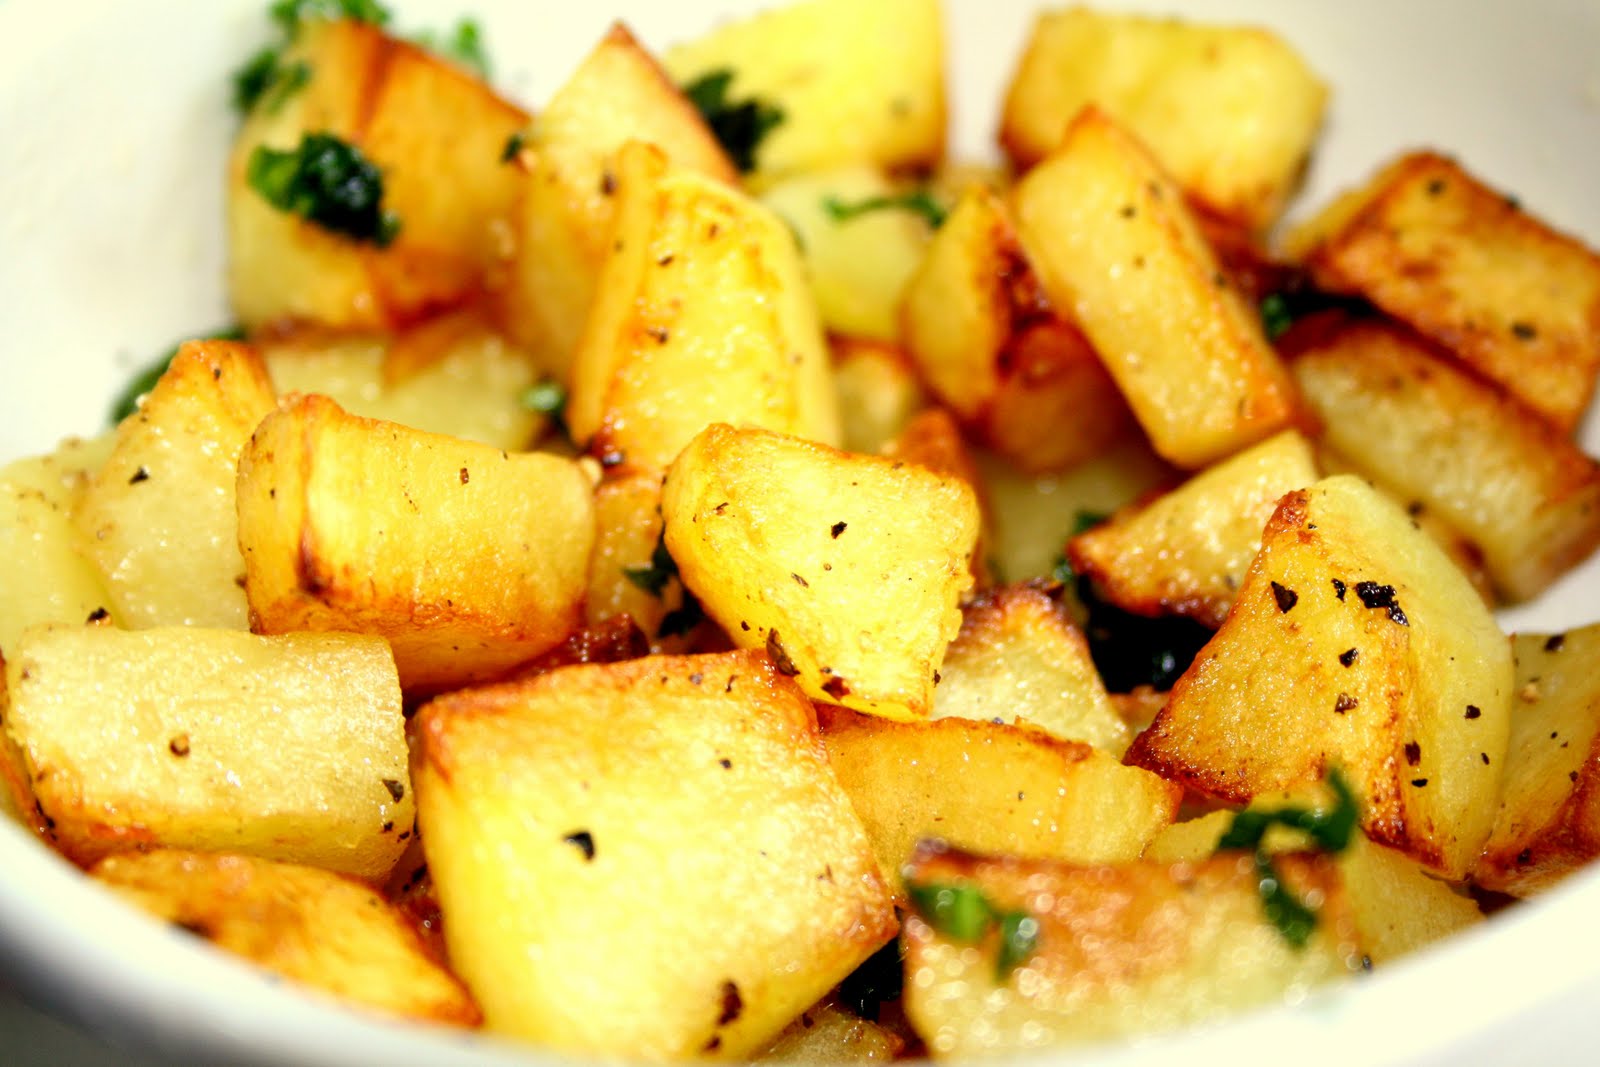 Can i steam potatoes for potato salad фото 79